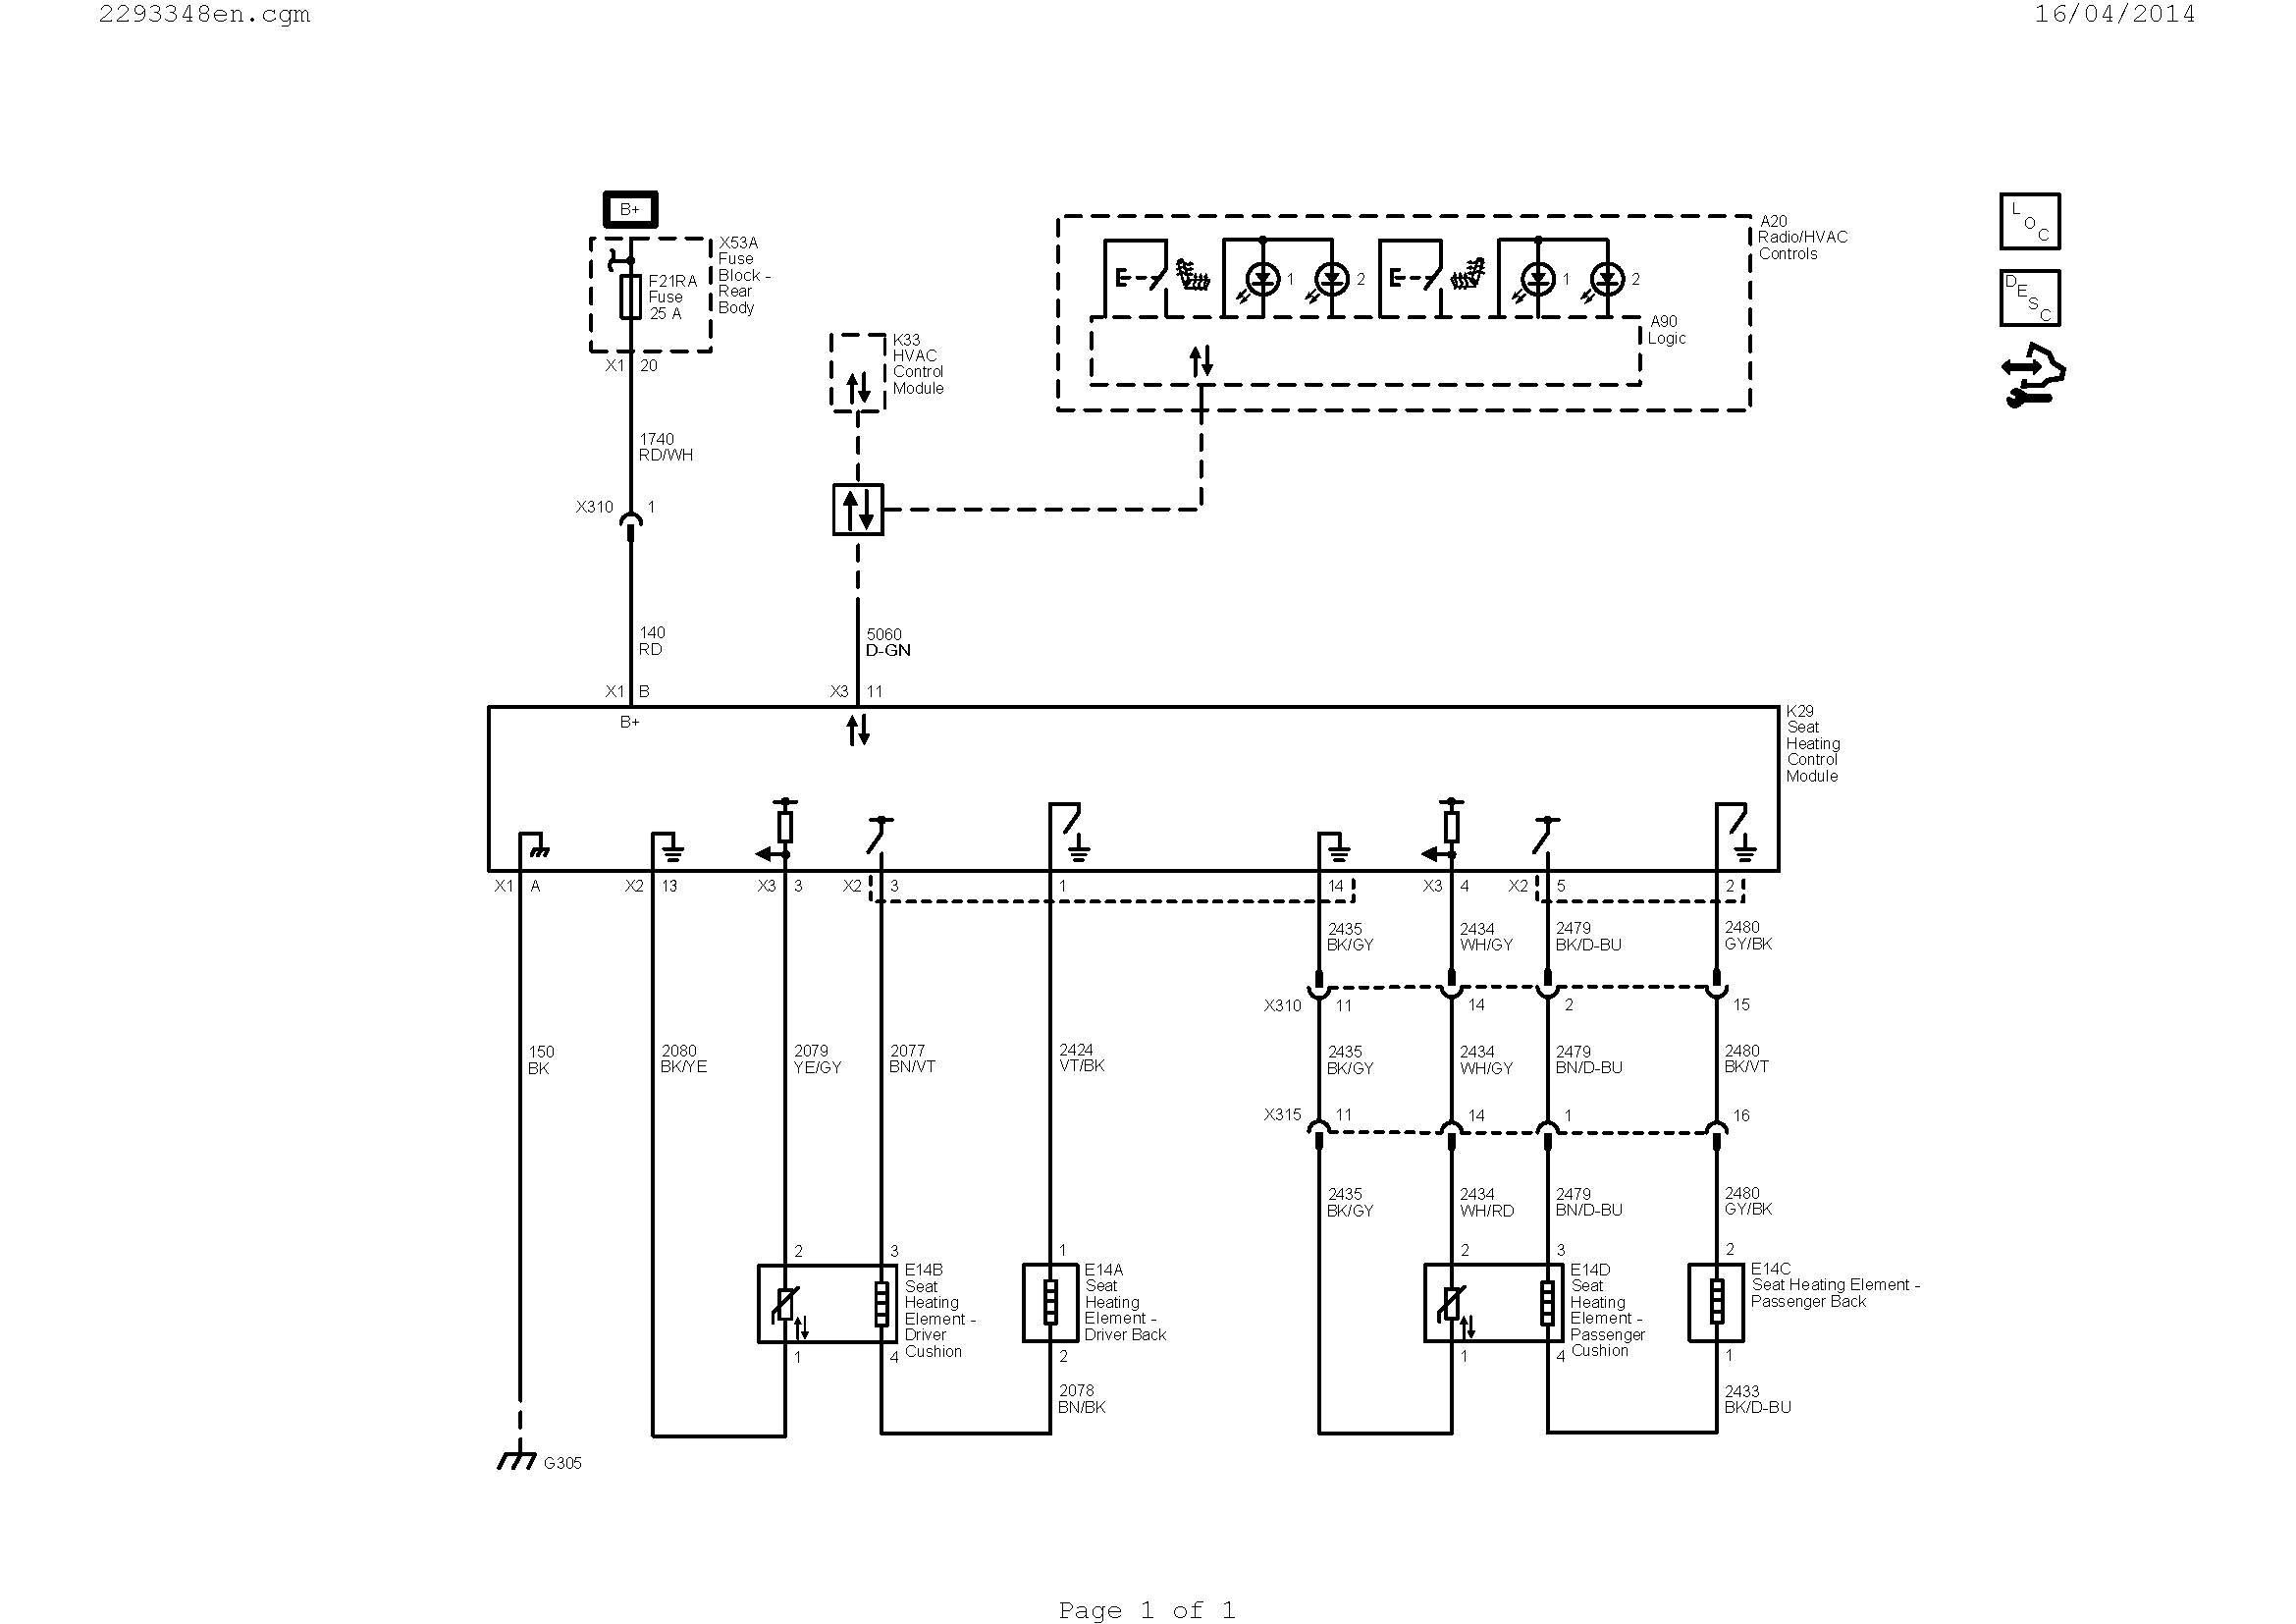 hvac wiring diagram wiring a ac thermostat diagram new wiring diagram ac valid hvac of hvac wiring diagram